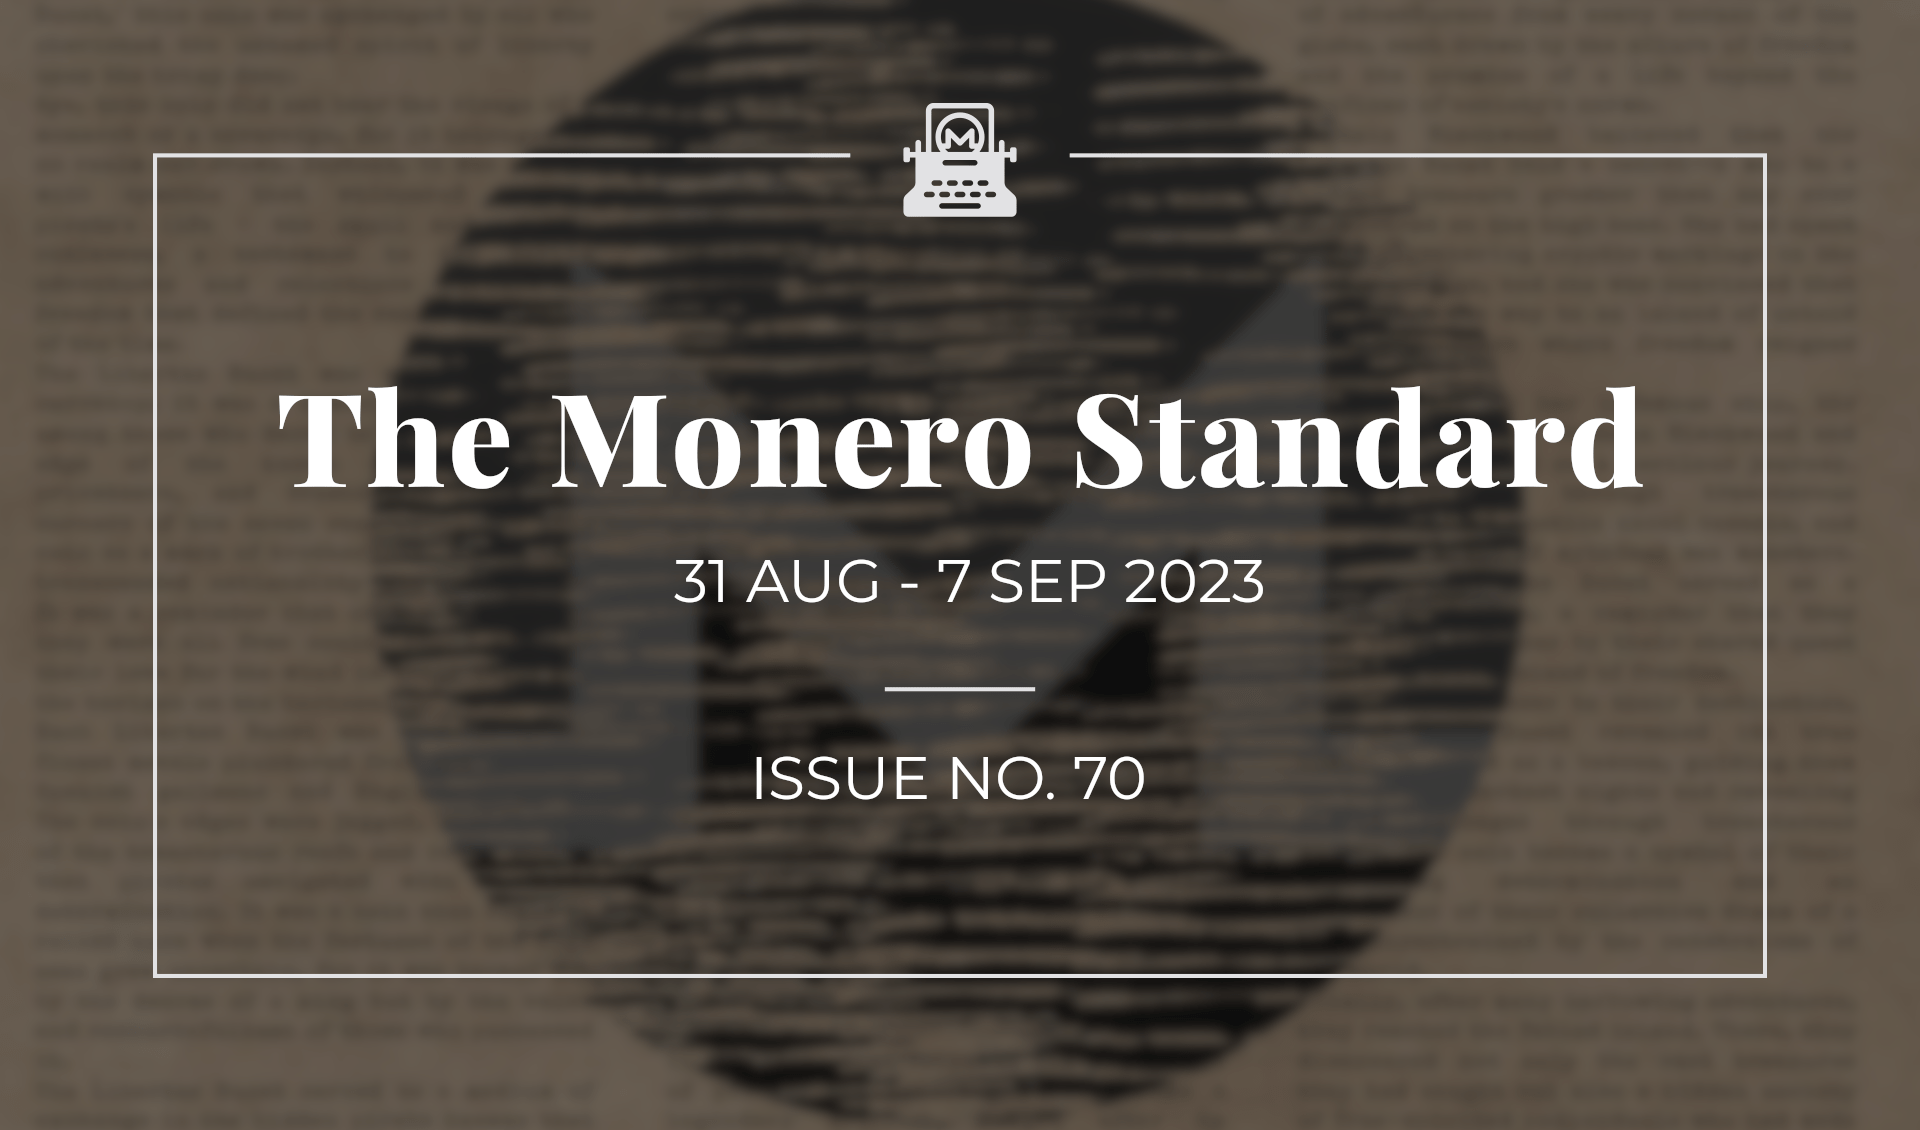 The Monero Standard #70: 31 Aug 2023 - 7 Sept 2023